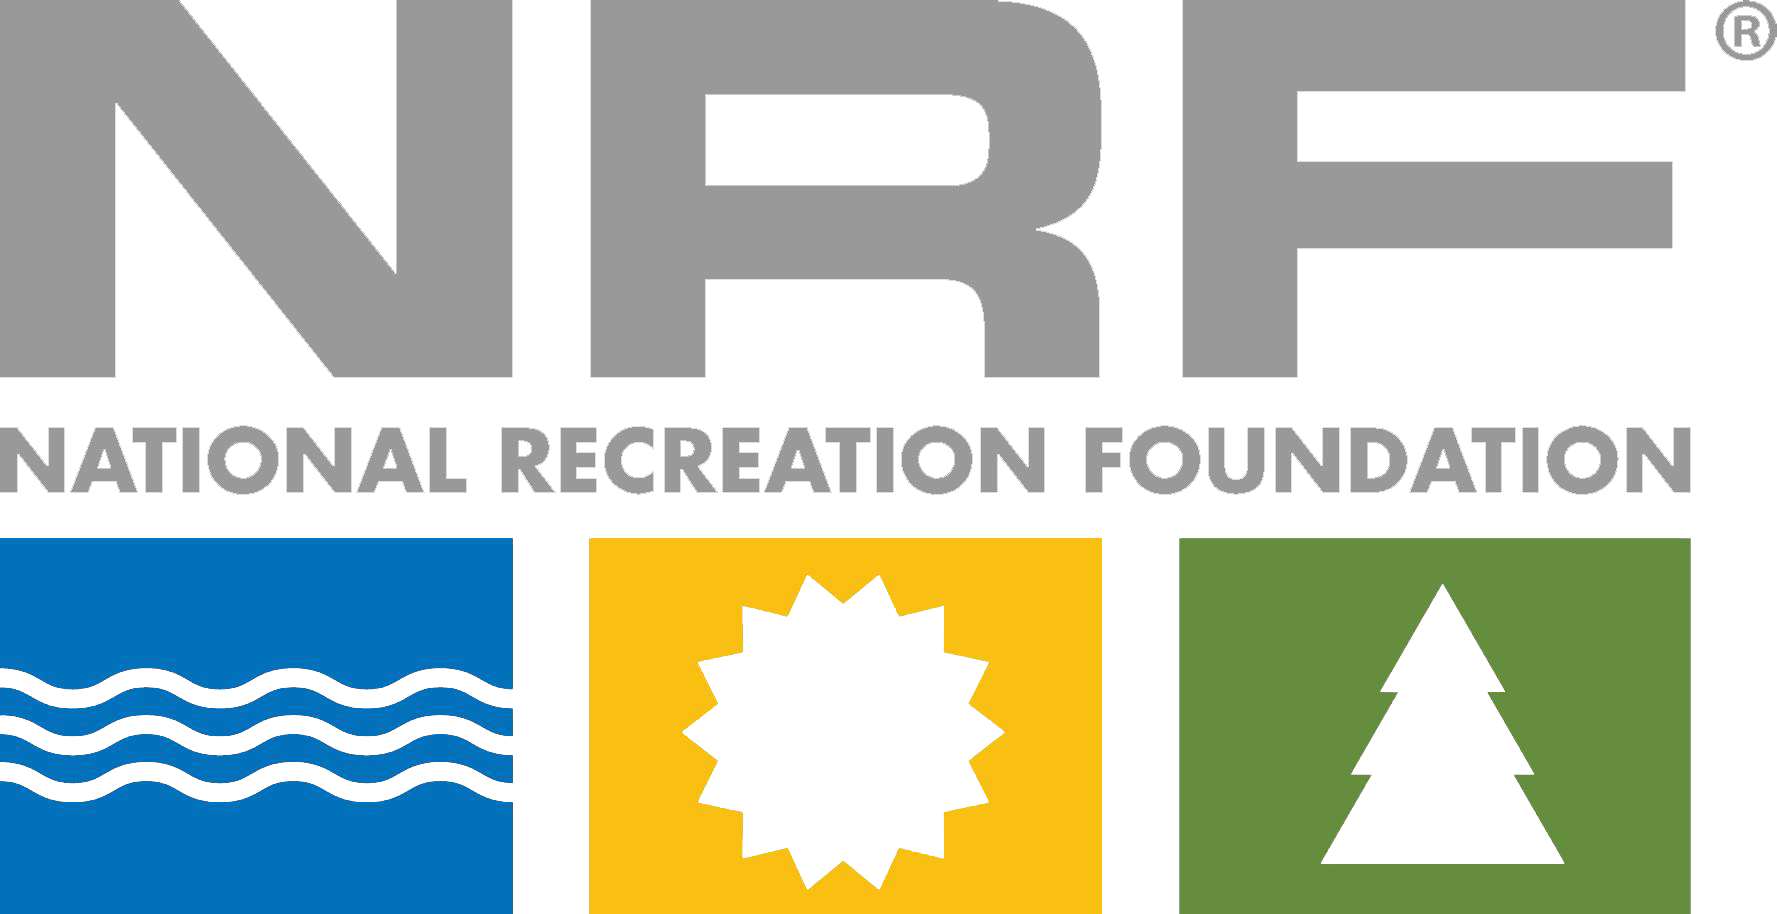 National Recreation Foundation Logo Transparent BG.png